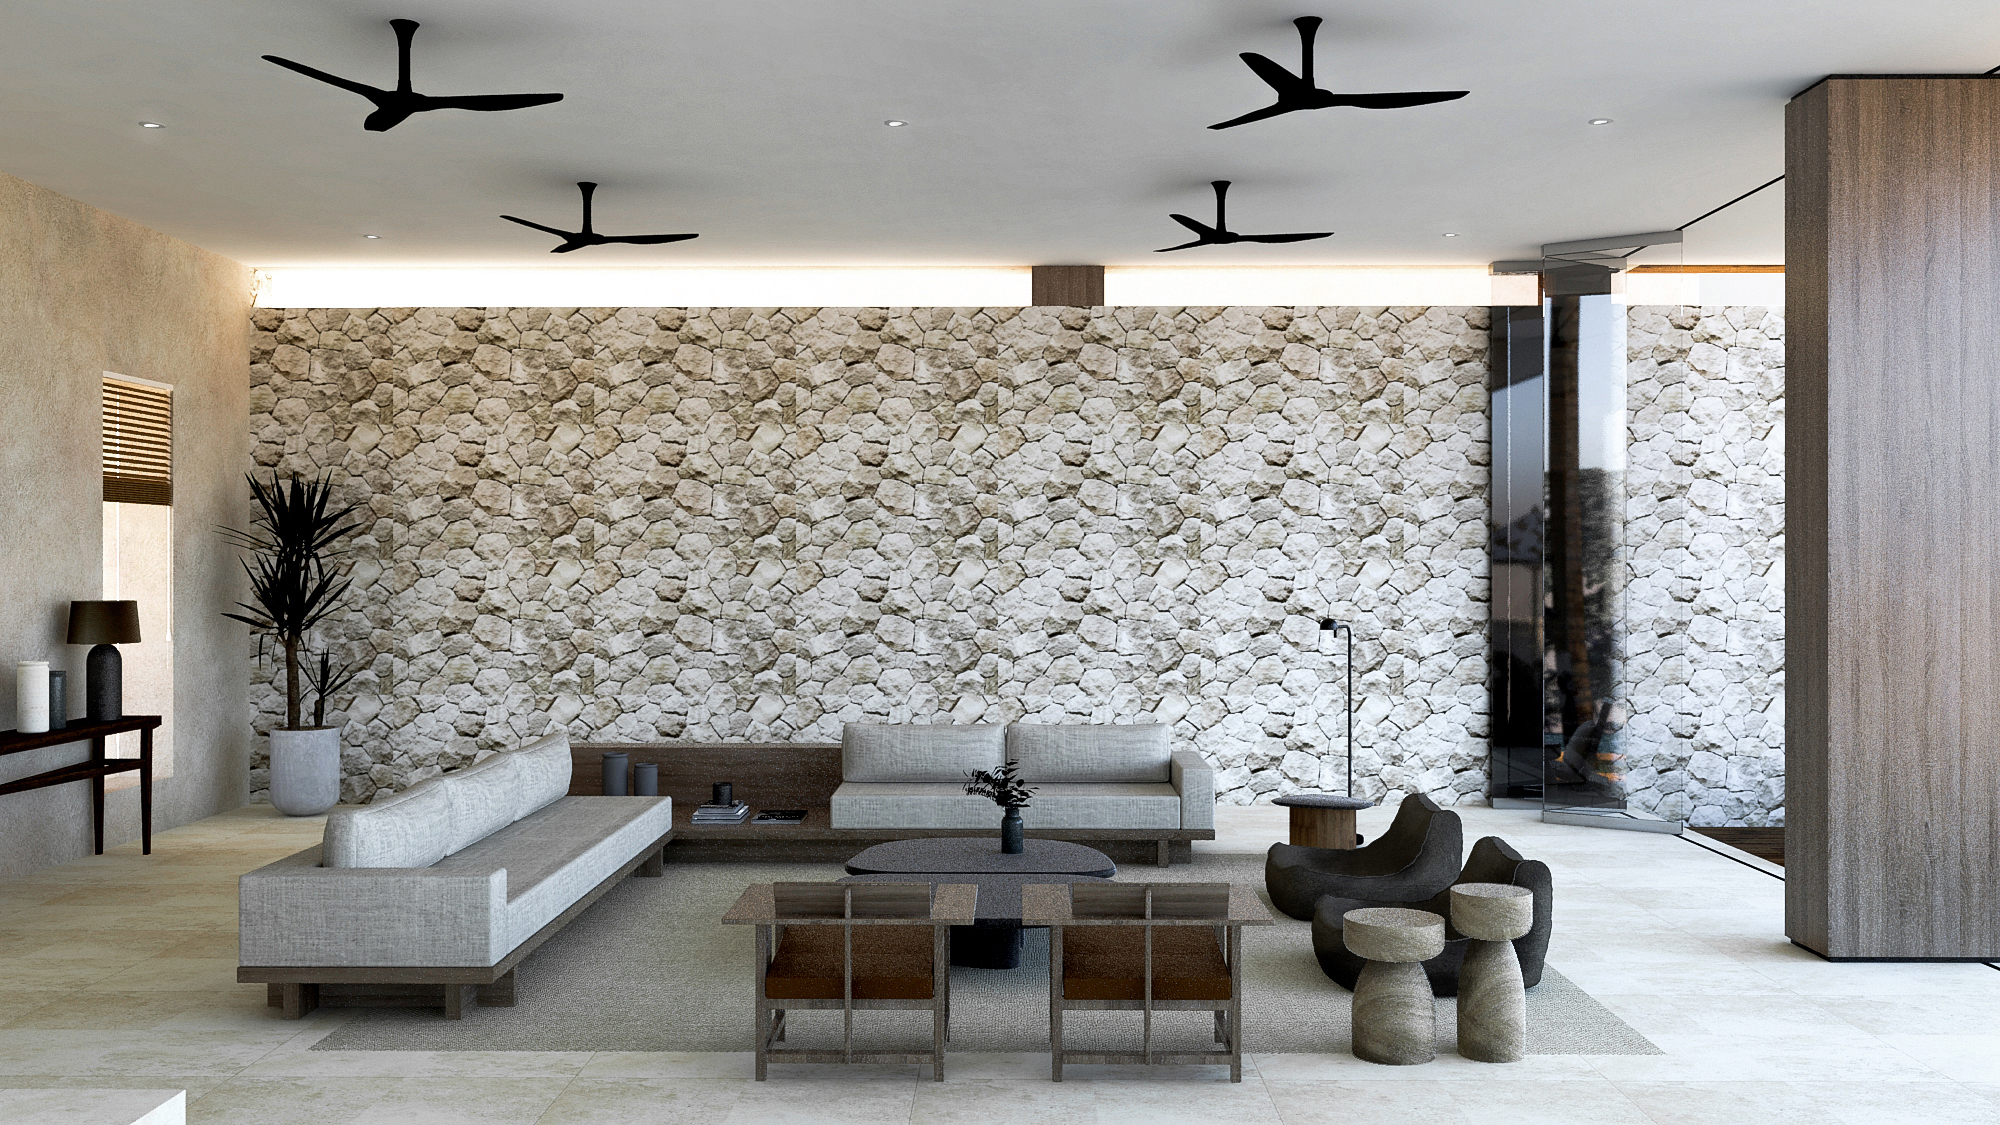 Design Assembly - Dreamland Villas - Bali Architect - Interior Design - Bali Villa - Living Room